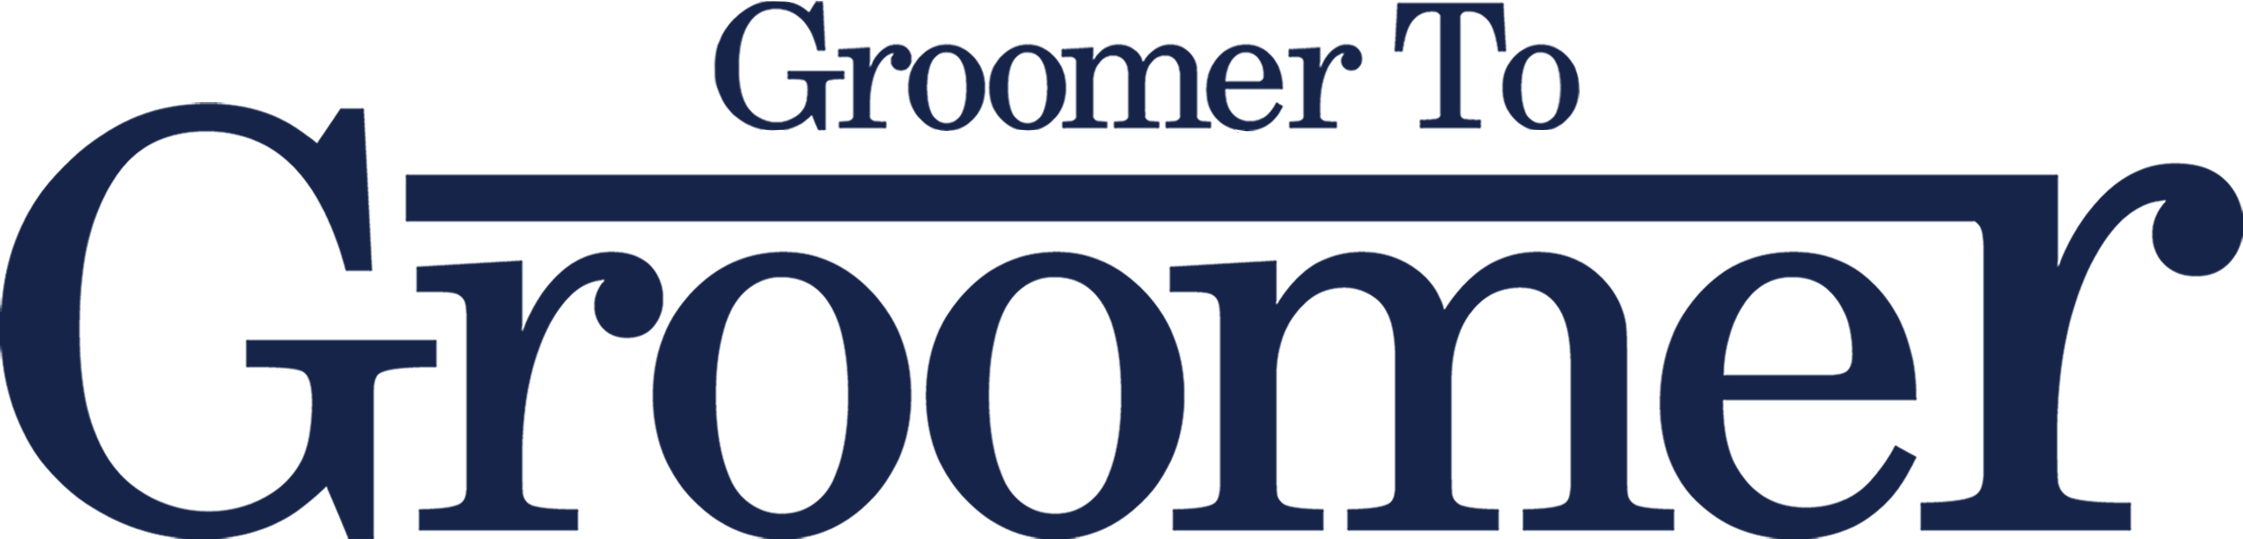 Groomer to Groomer logo brown